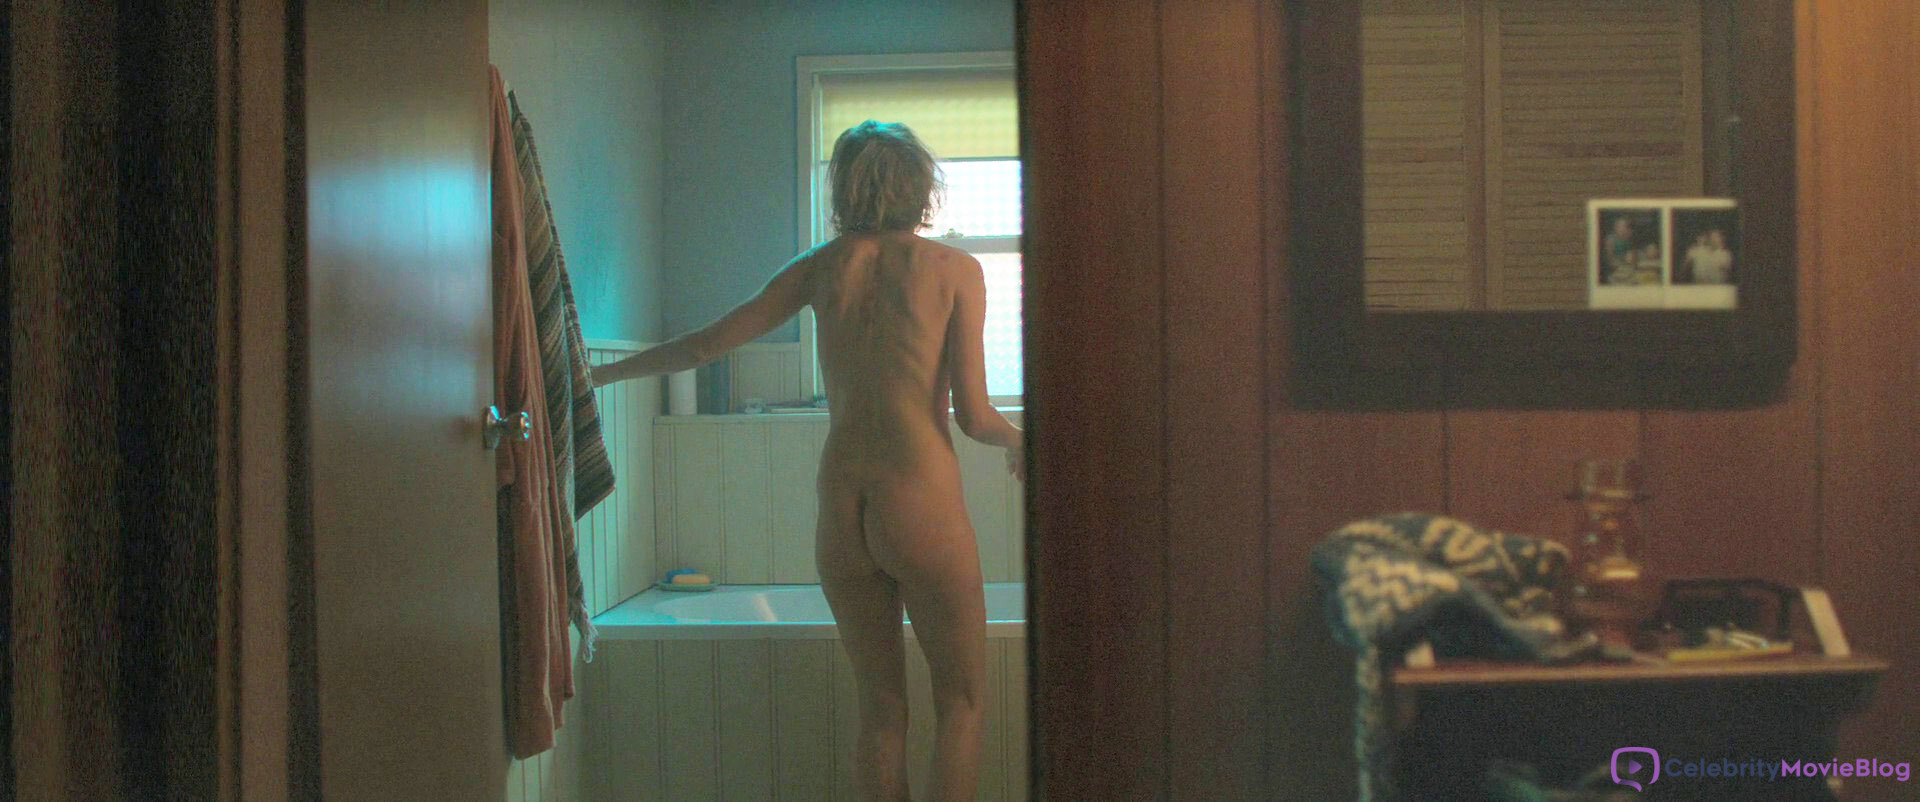 Naomi Watts 21 Grams Nude